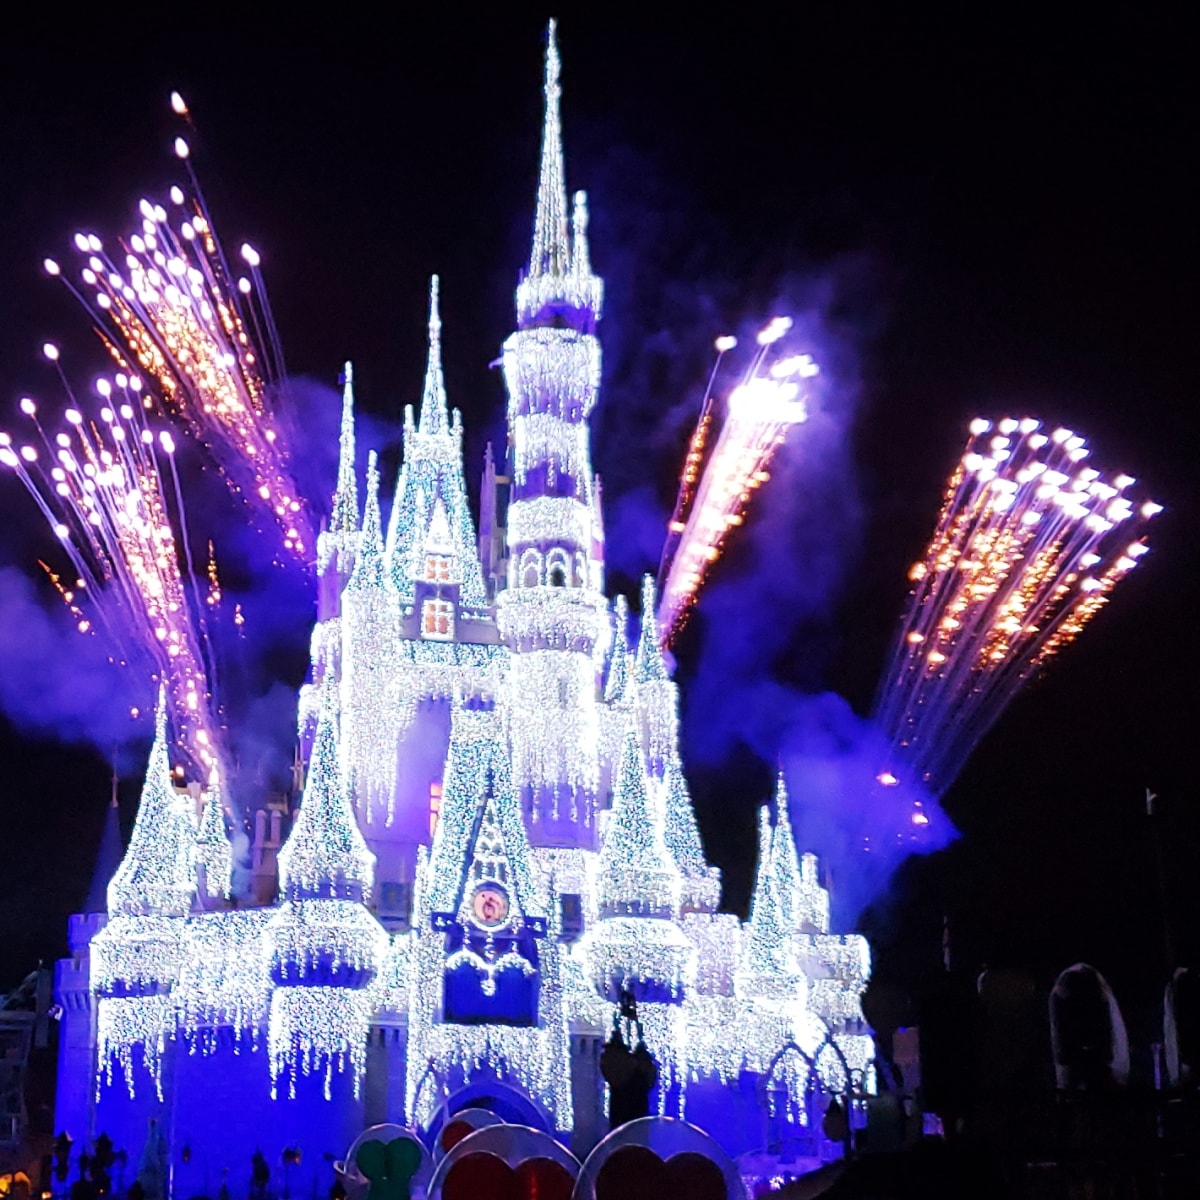 Fireworks and lights on Cinderella's Castle